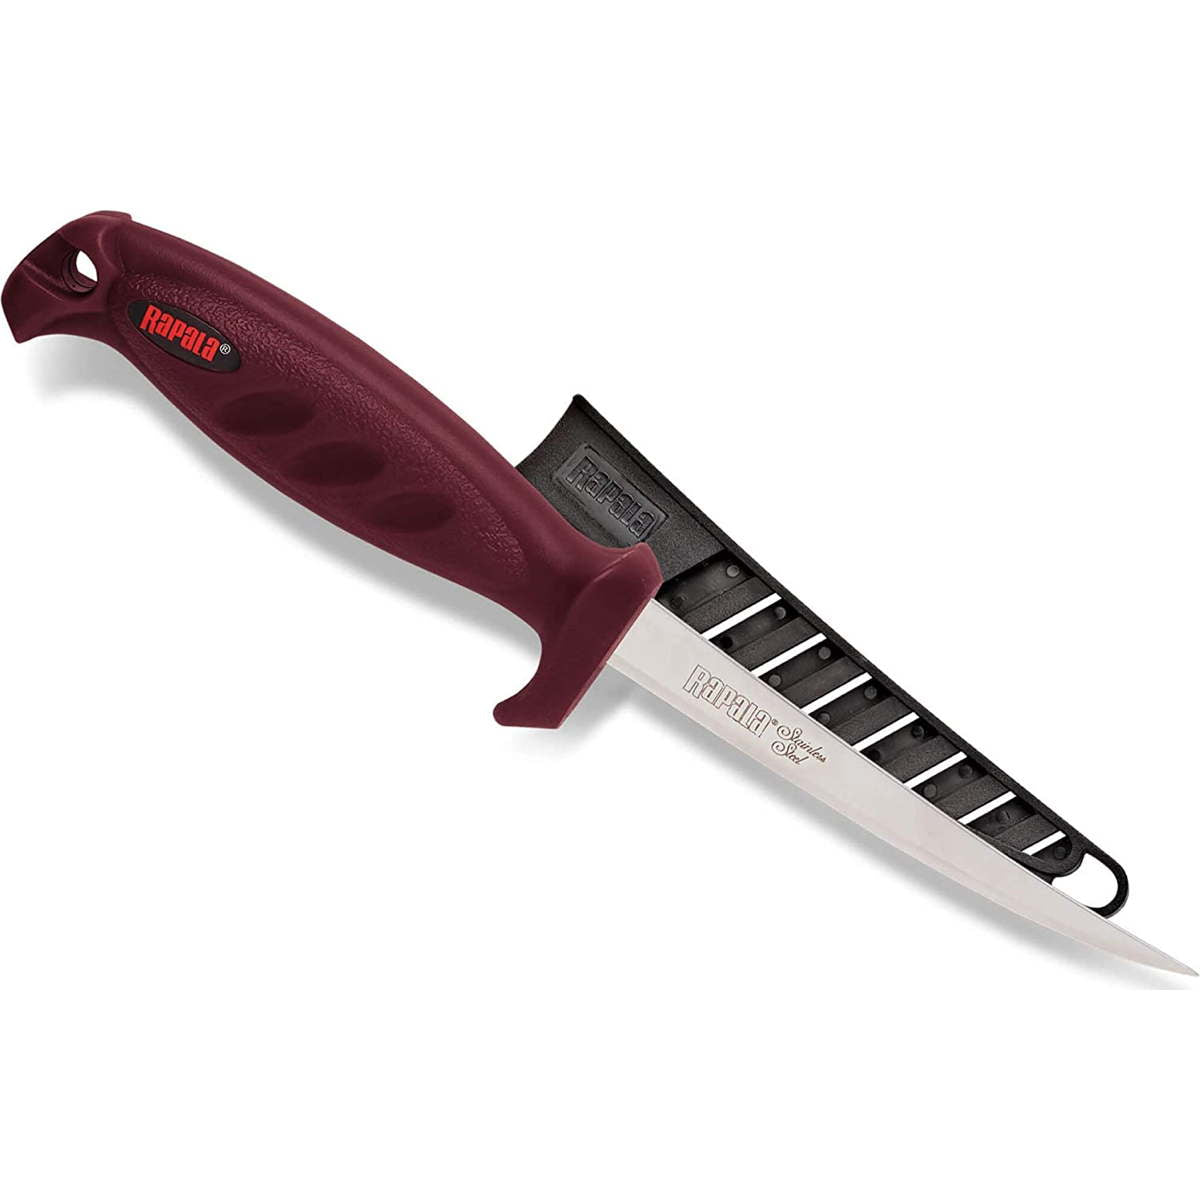 Photo of Rapala Hawk Fillet Knife for sale at United Tackle Shops.